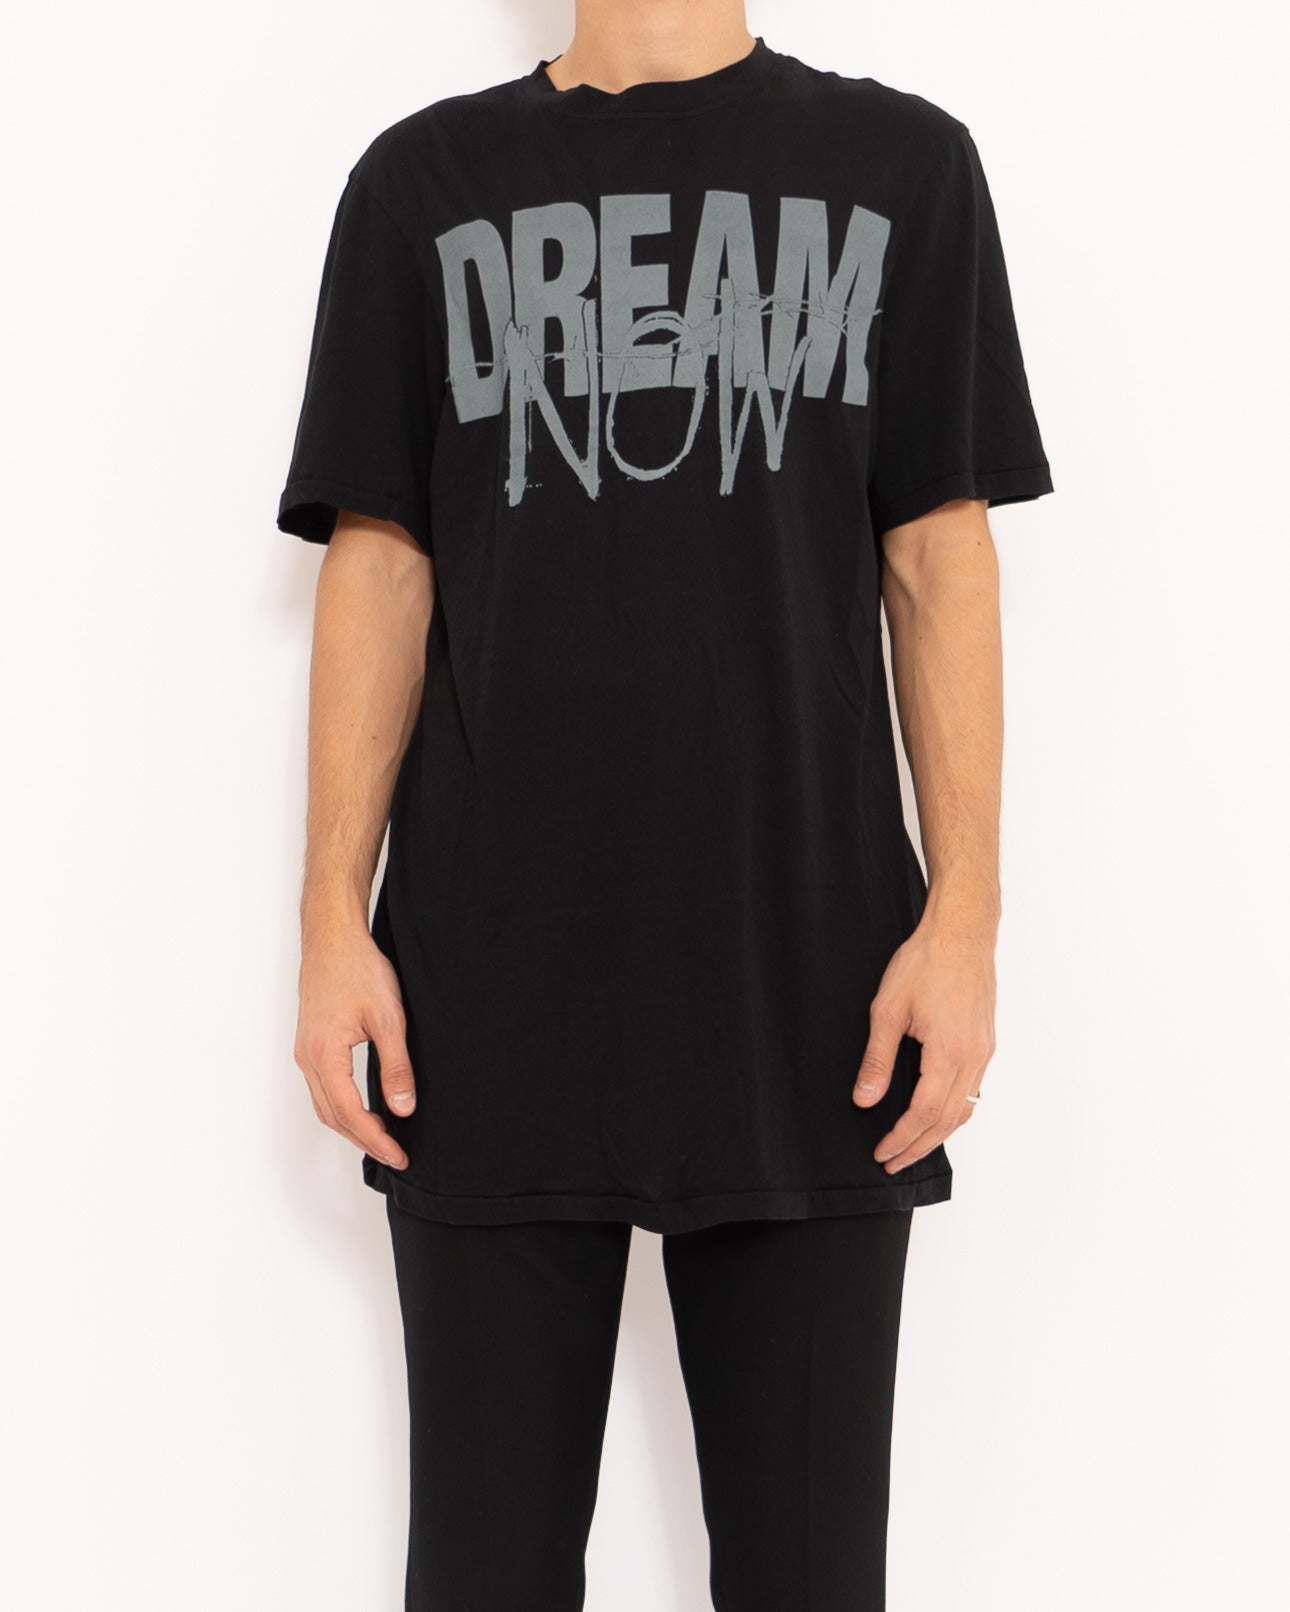 SS19 Grey "Dream Now" T-Shirt Sample